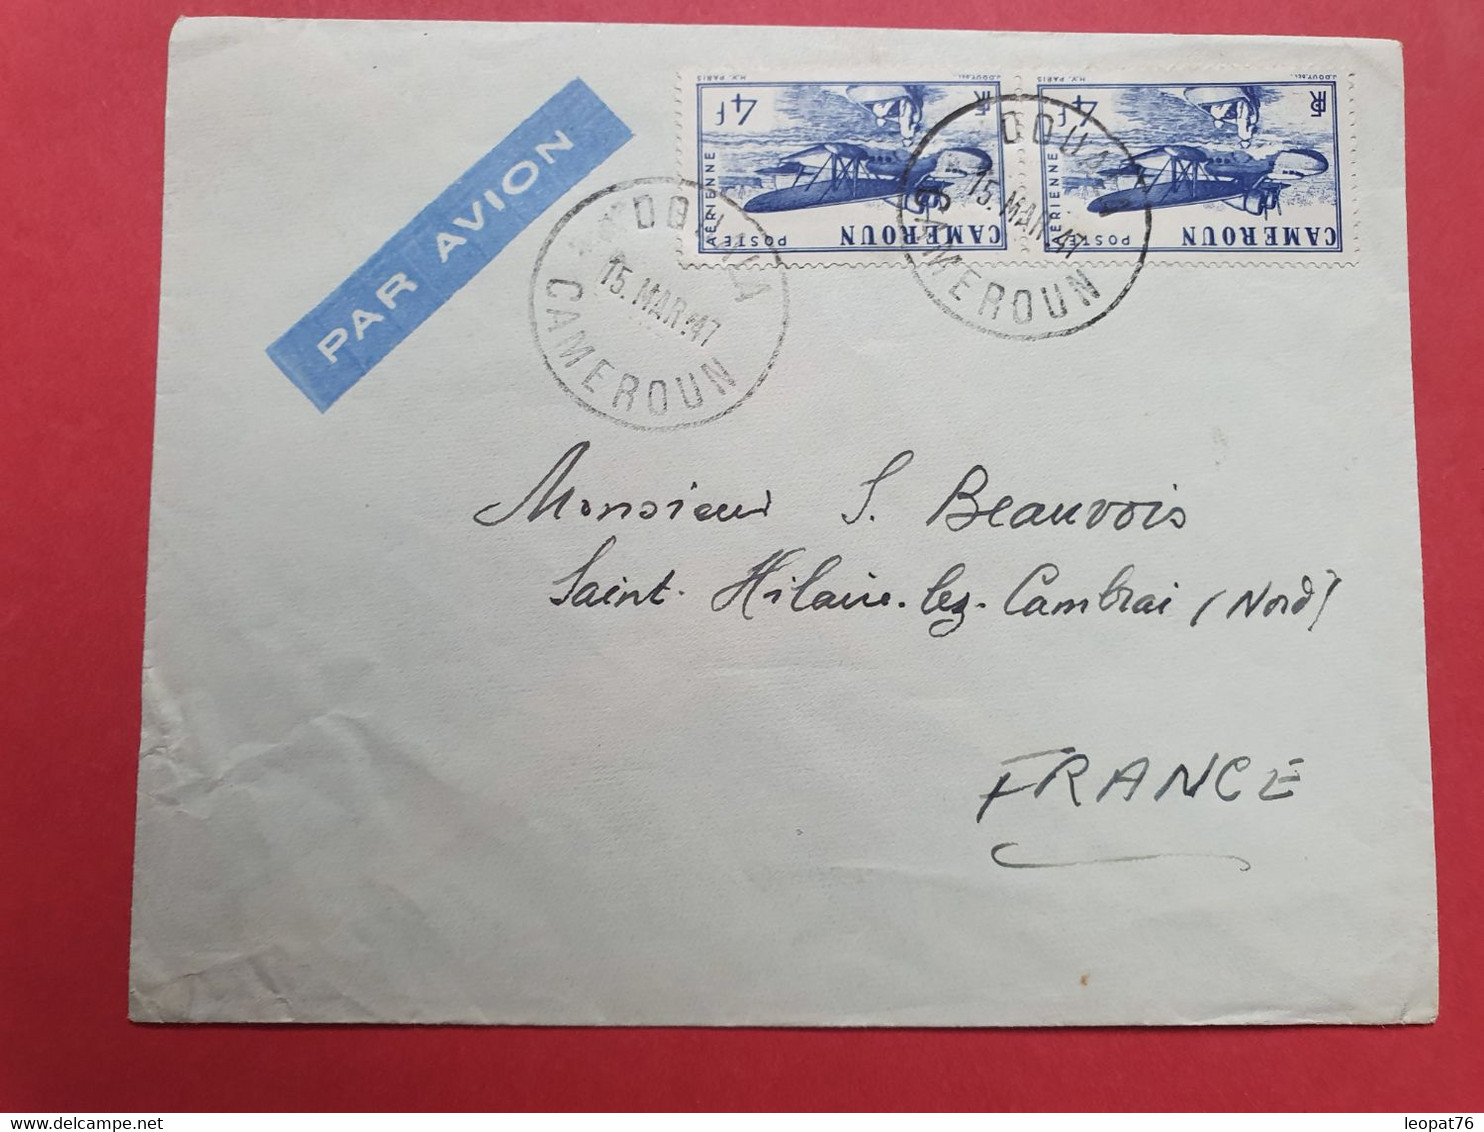 Cameroun - Enveloppe De Douala Pour La France En 1947 - N 33 - Briefe U. Dokumente